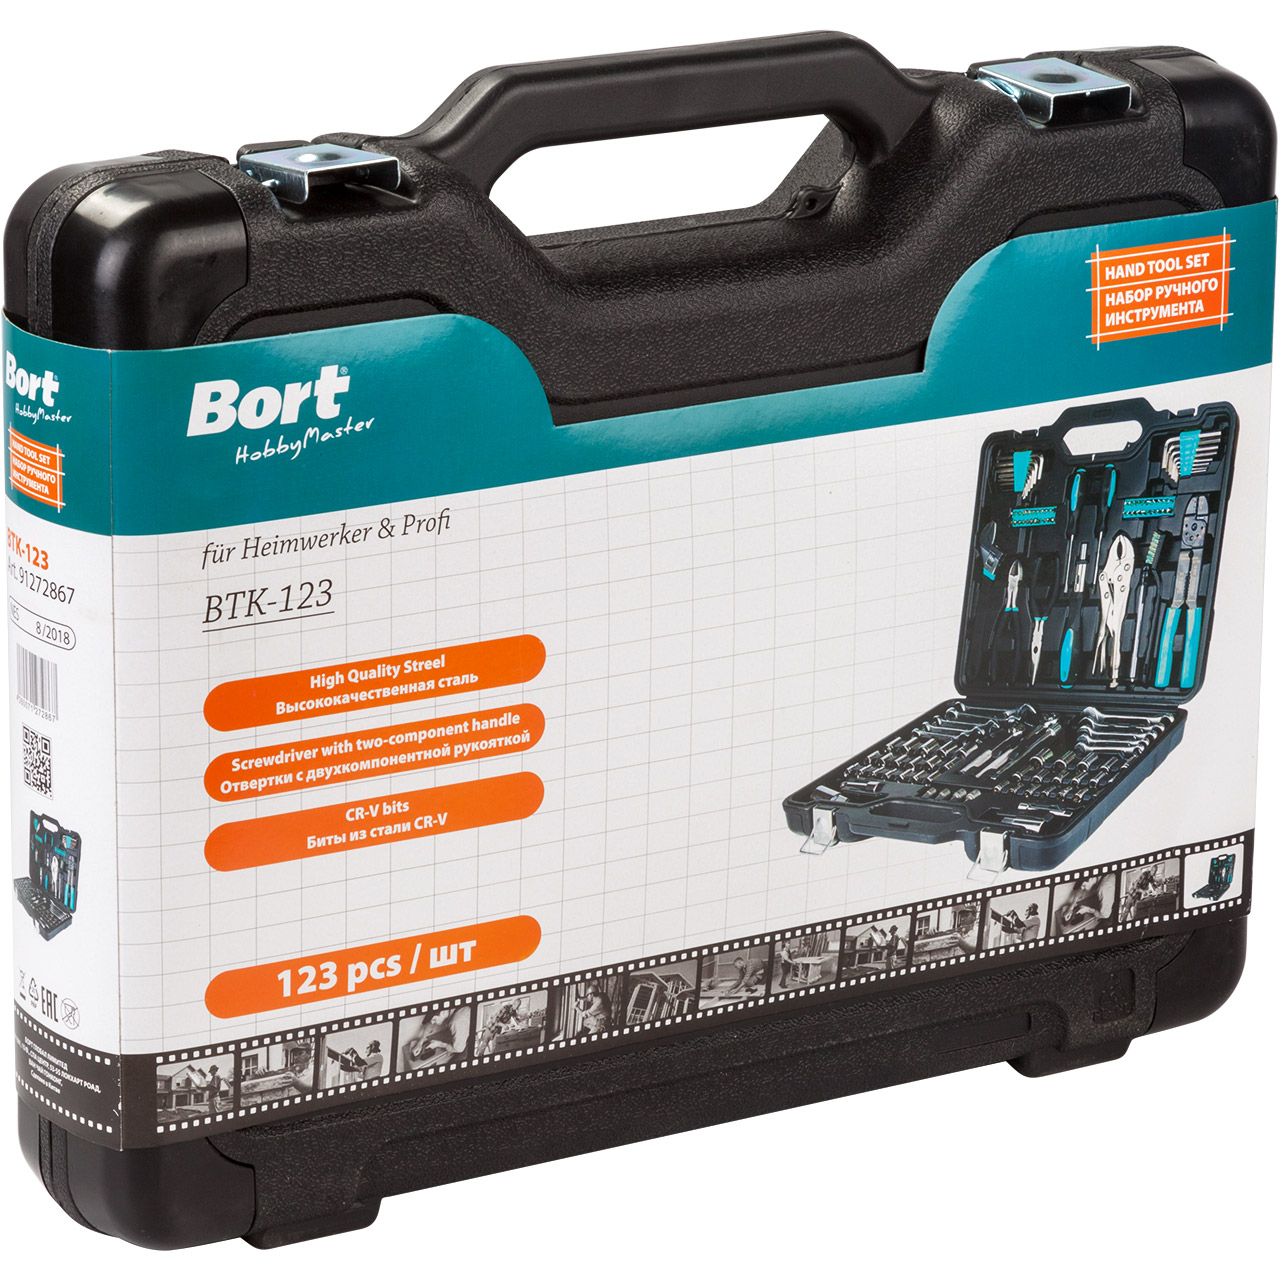 Hand tool set BORT BTK-123